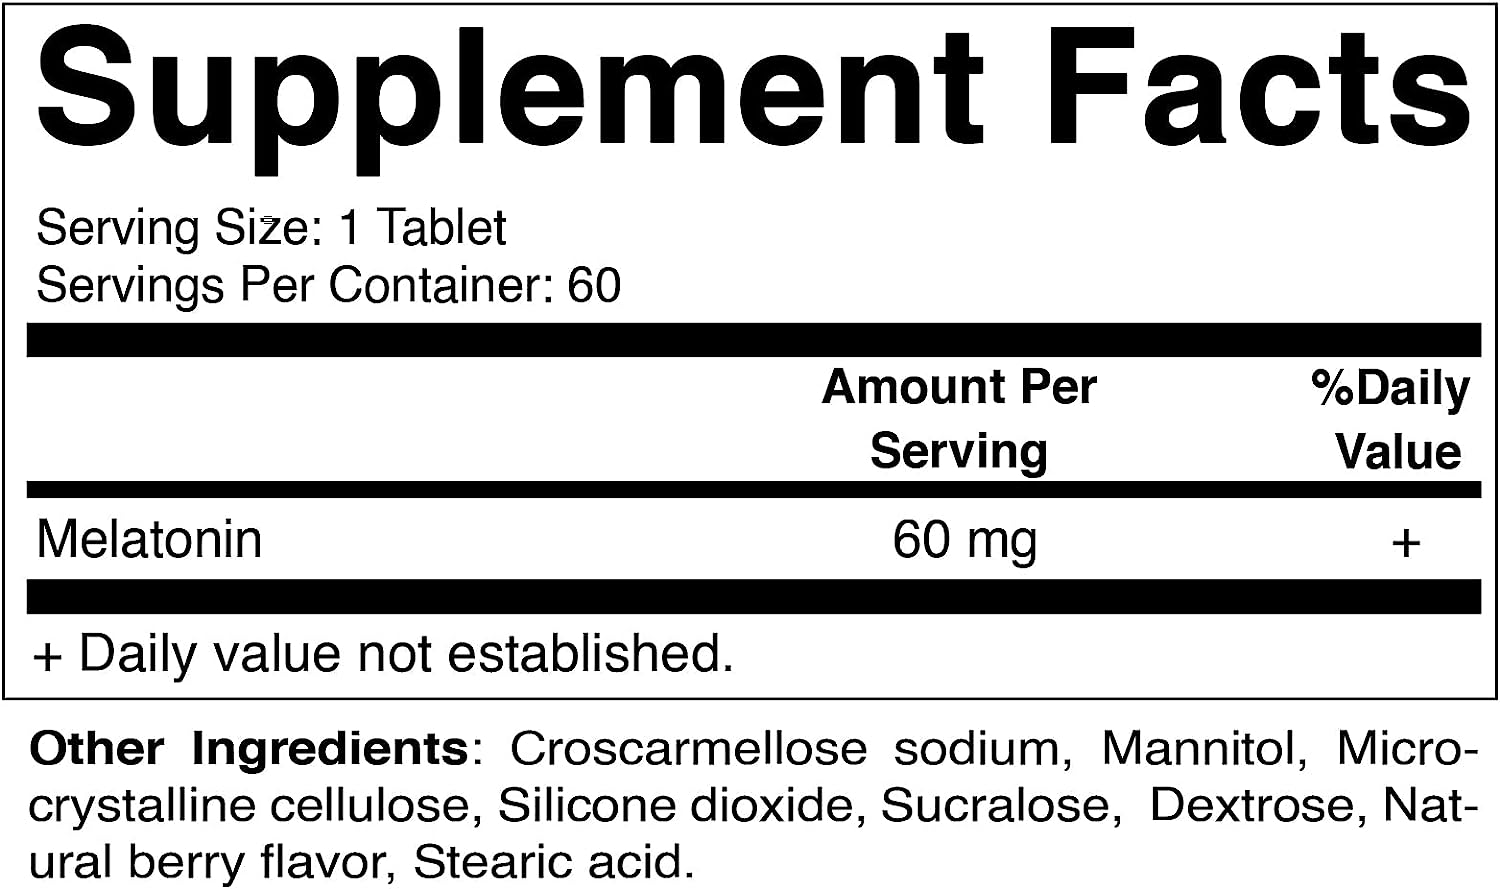 Vitamatic-Melatonin-60mg-Fast-Dissolve-Tablets-60-Vegan-Natural-Berry-Flavor-Tablets-Non-Habit-Forming-Non-GMO-Gluten-Free-(1 Bottle)